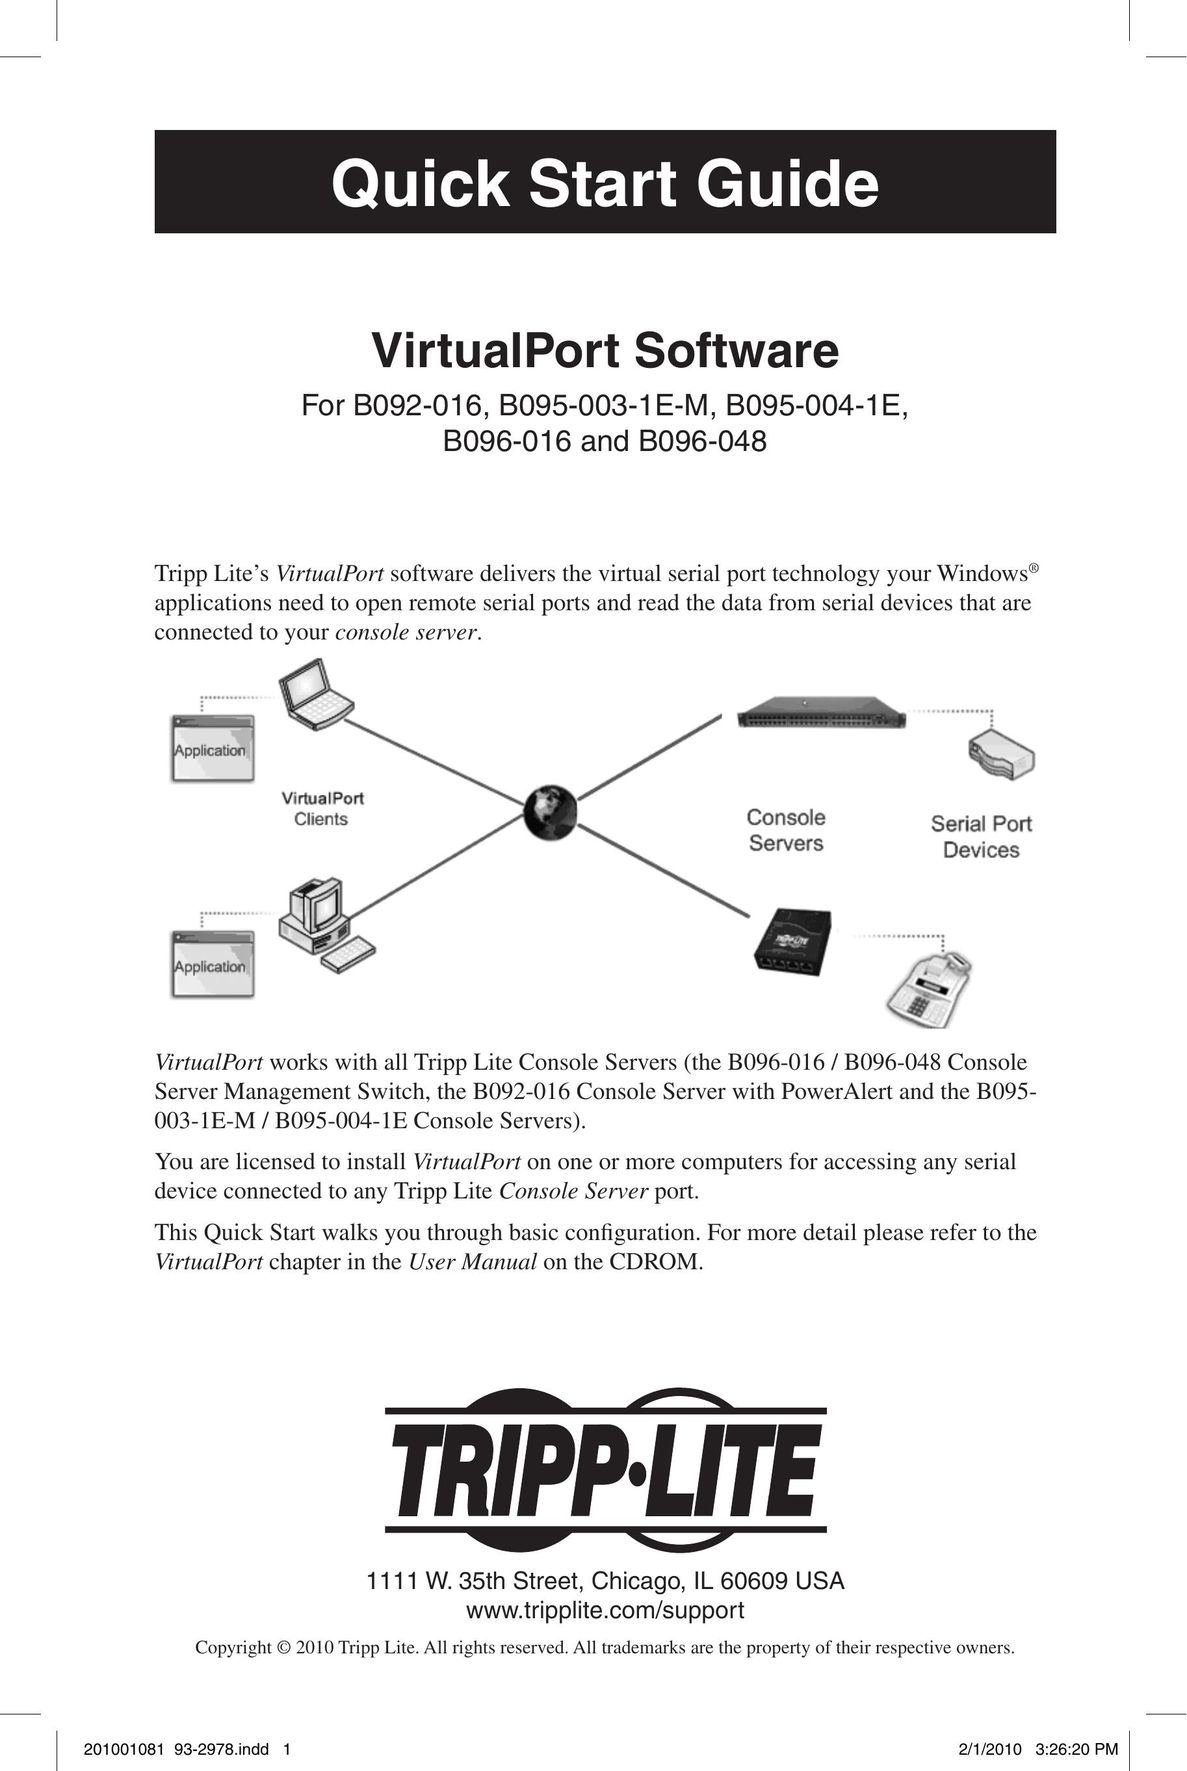 Tripp Lite B095-003-1E-M Network Card User Manual